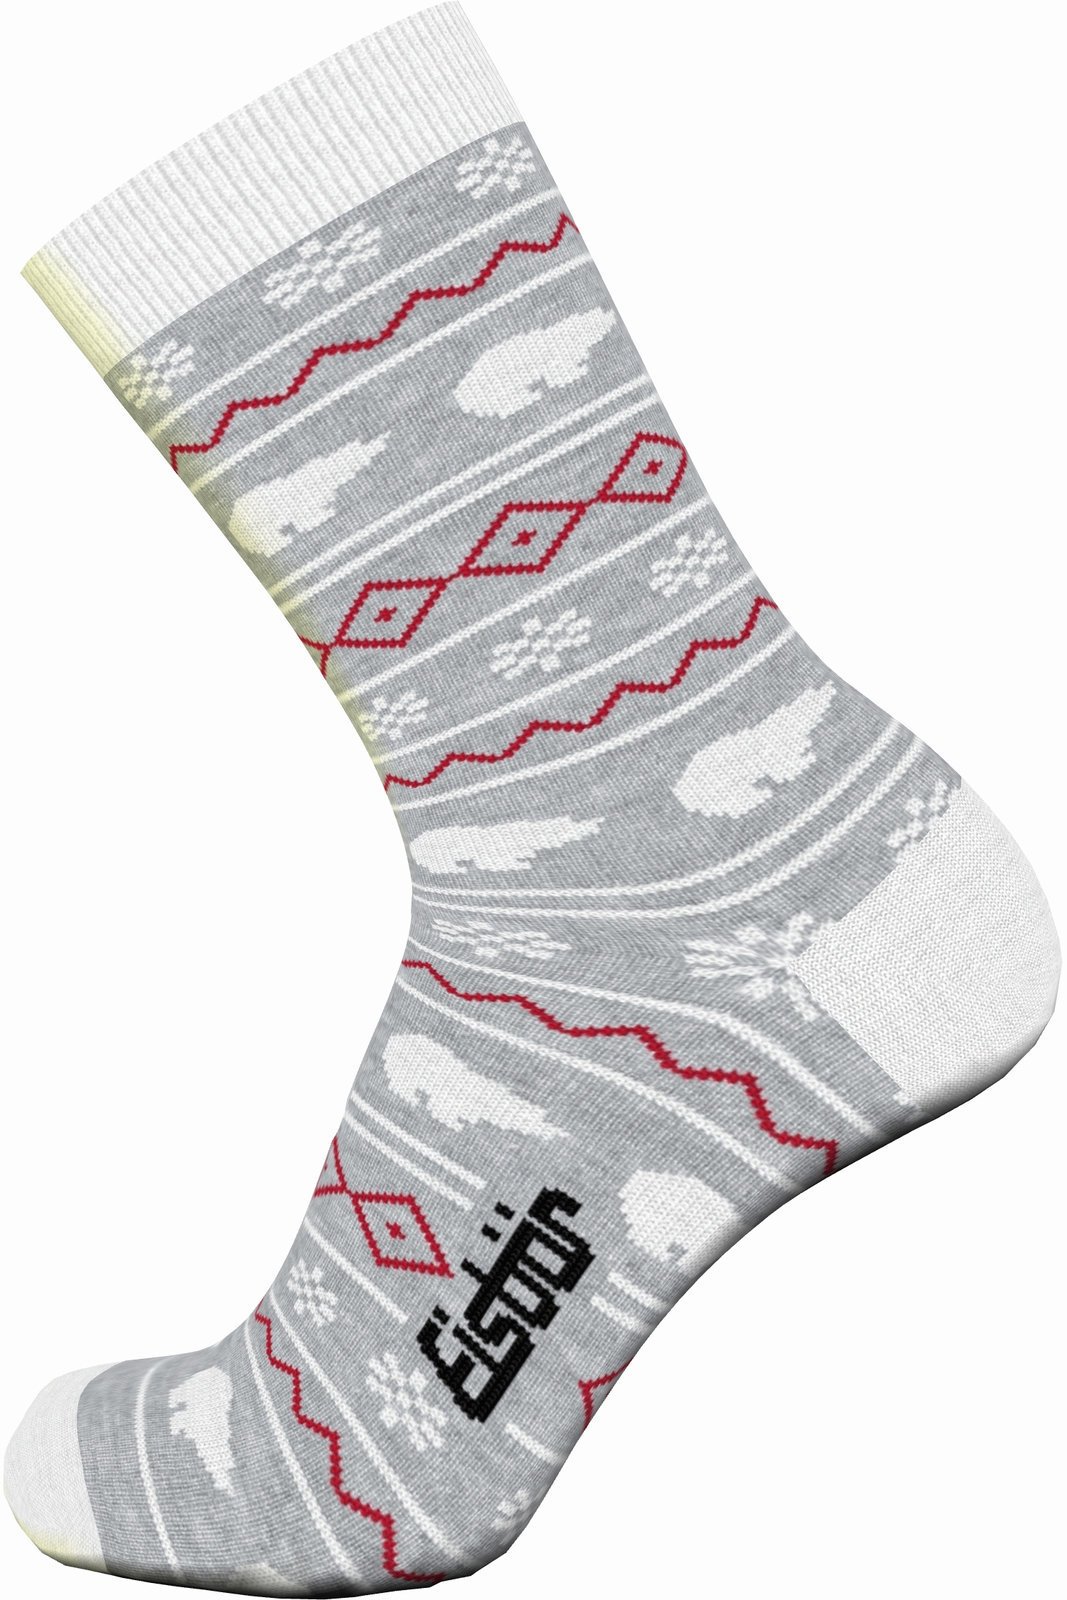 Ski Socks Eisbär Lifestyle Jacquard Grey-Red 23-26 Ski Socks